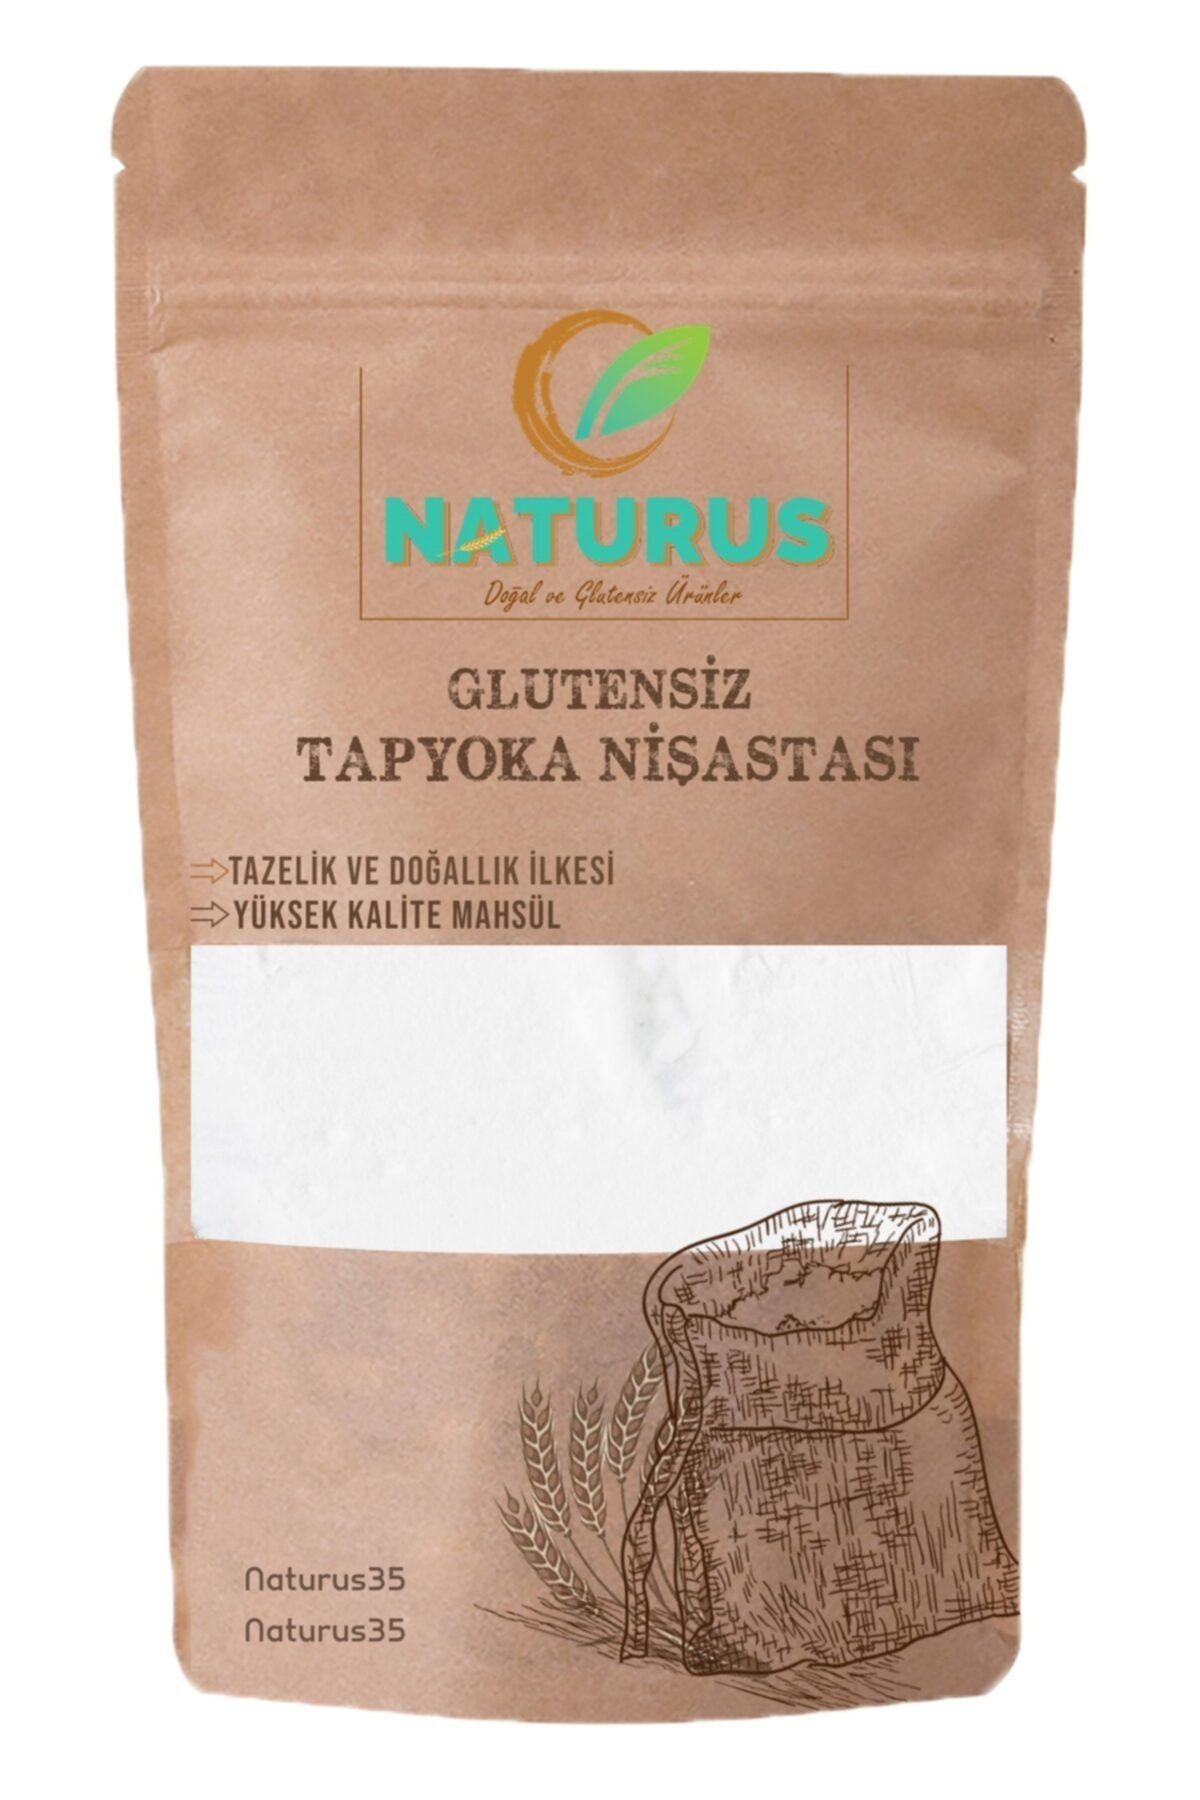 NATURUS Tapyoka Nişastası Glutensiz 300g